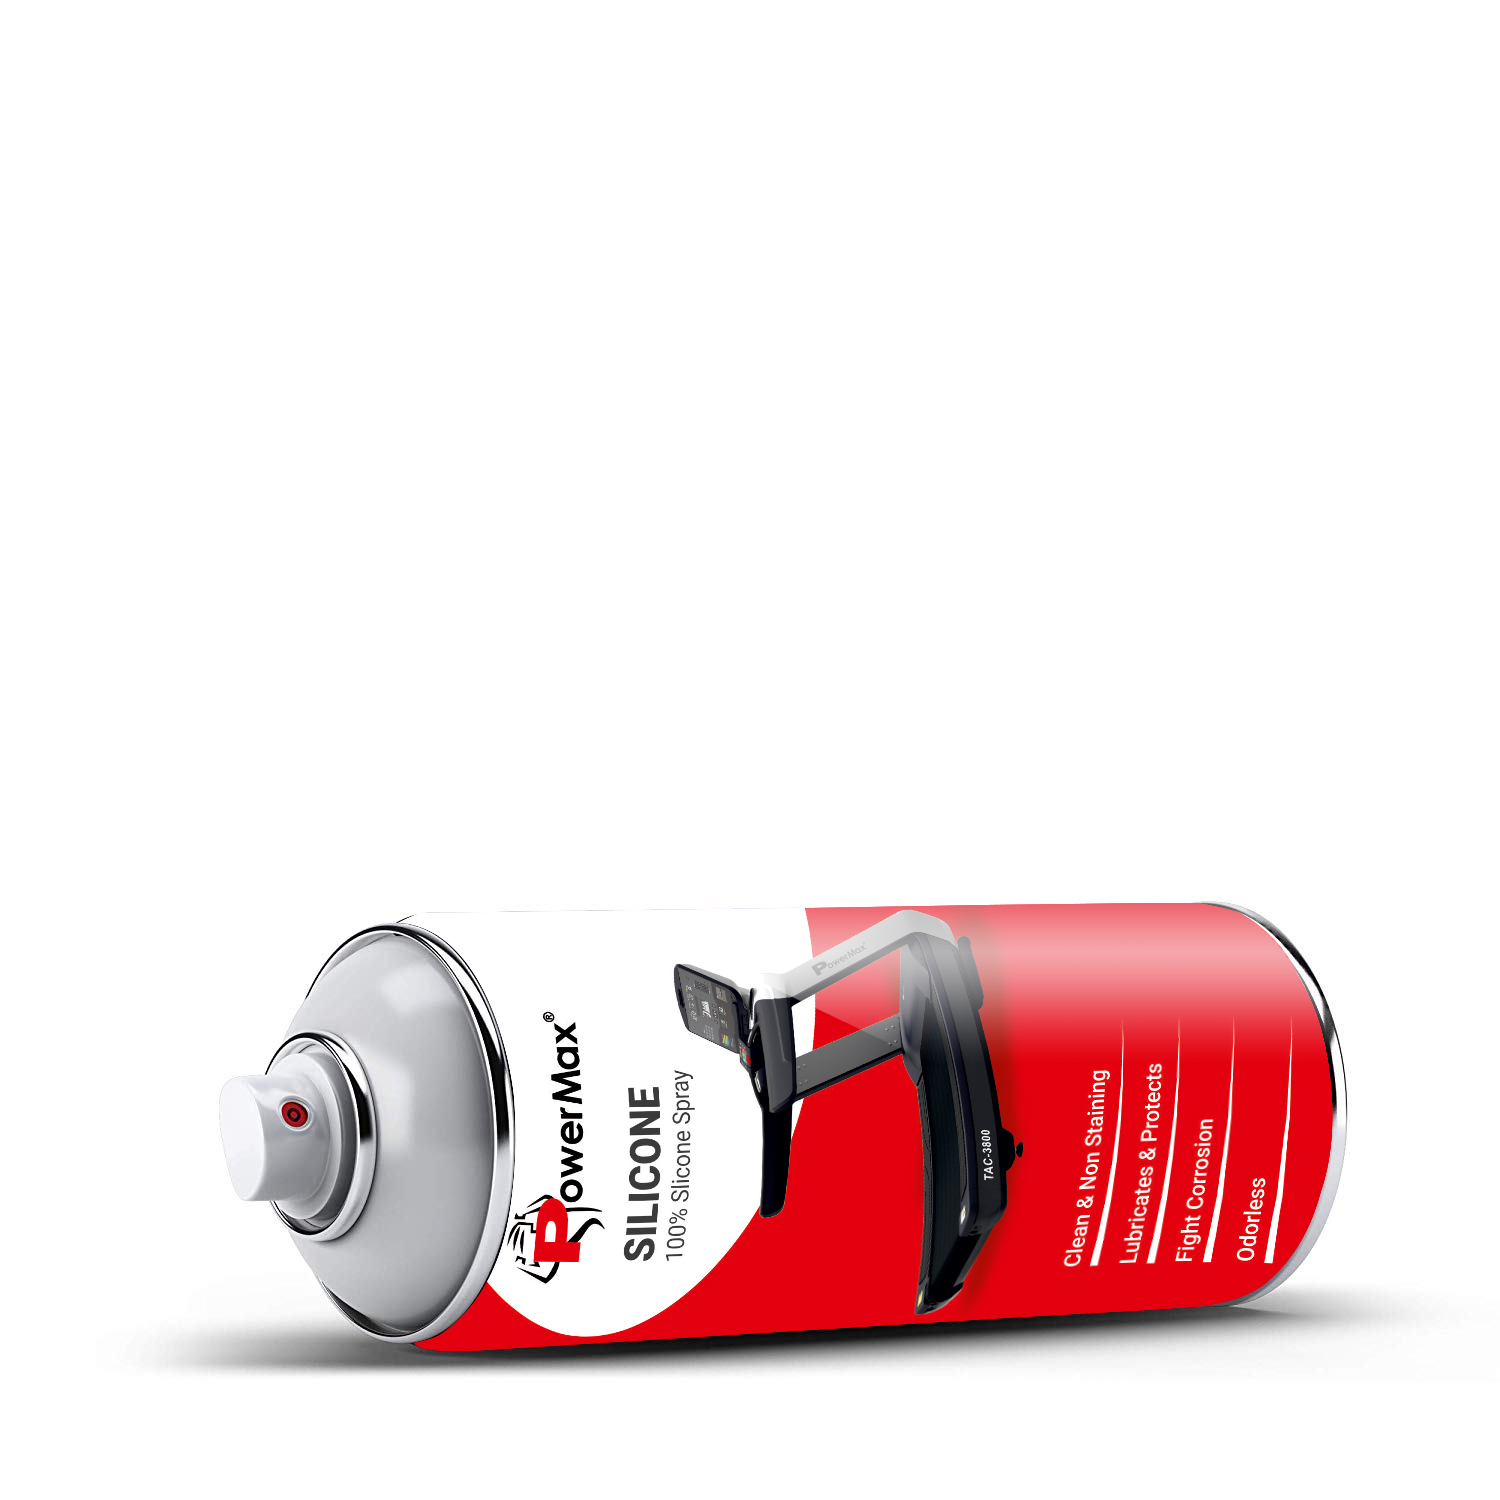 Silicone Oil Lubricant Spray for Treadmill, 500ml